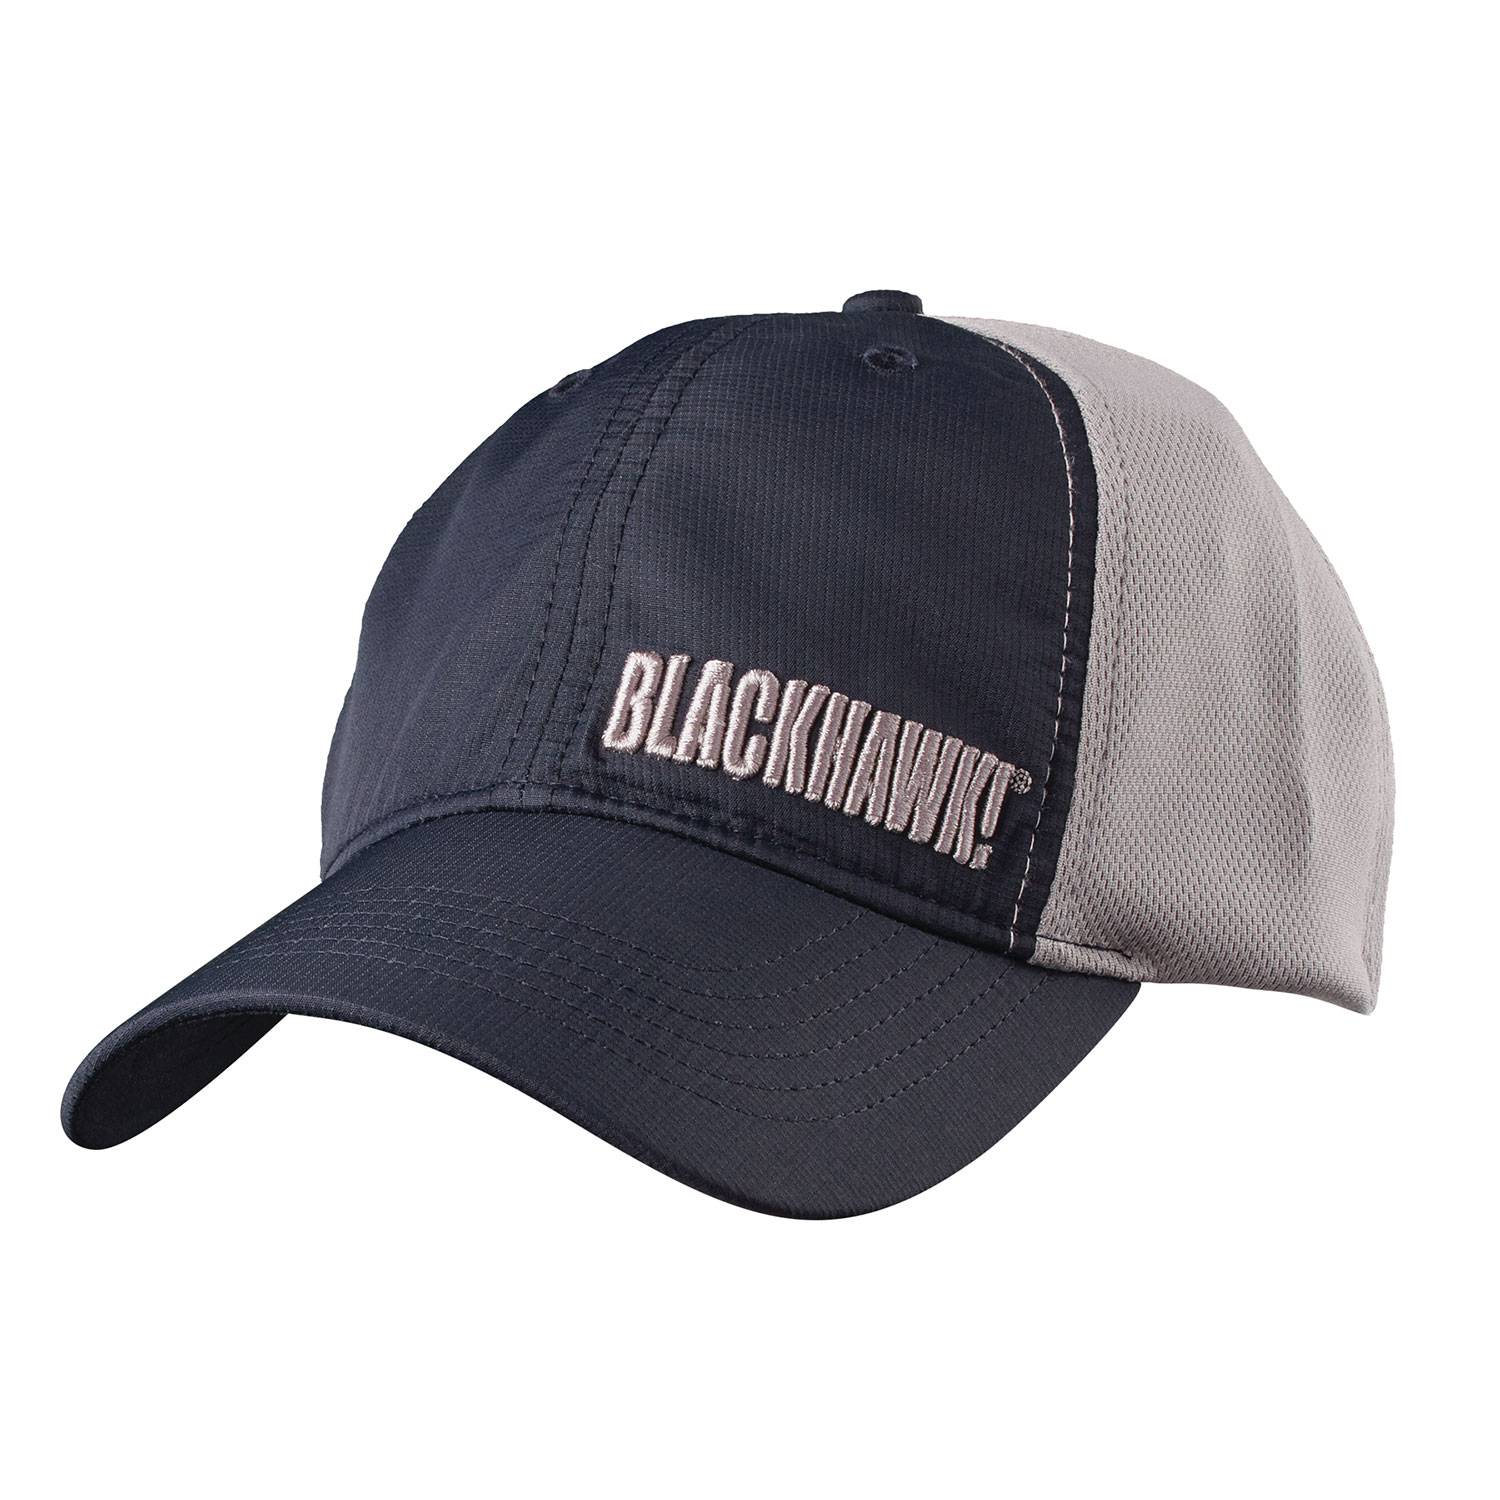 BLACKHAWK Performance Mesh Cap